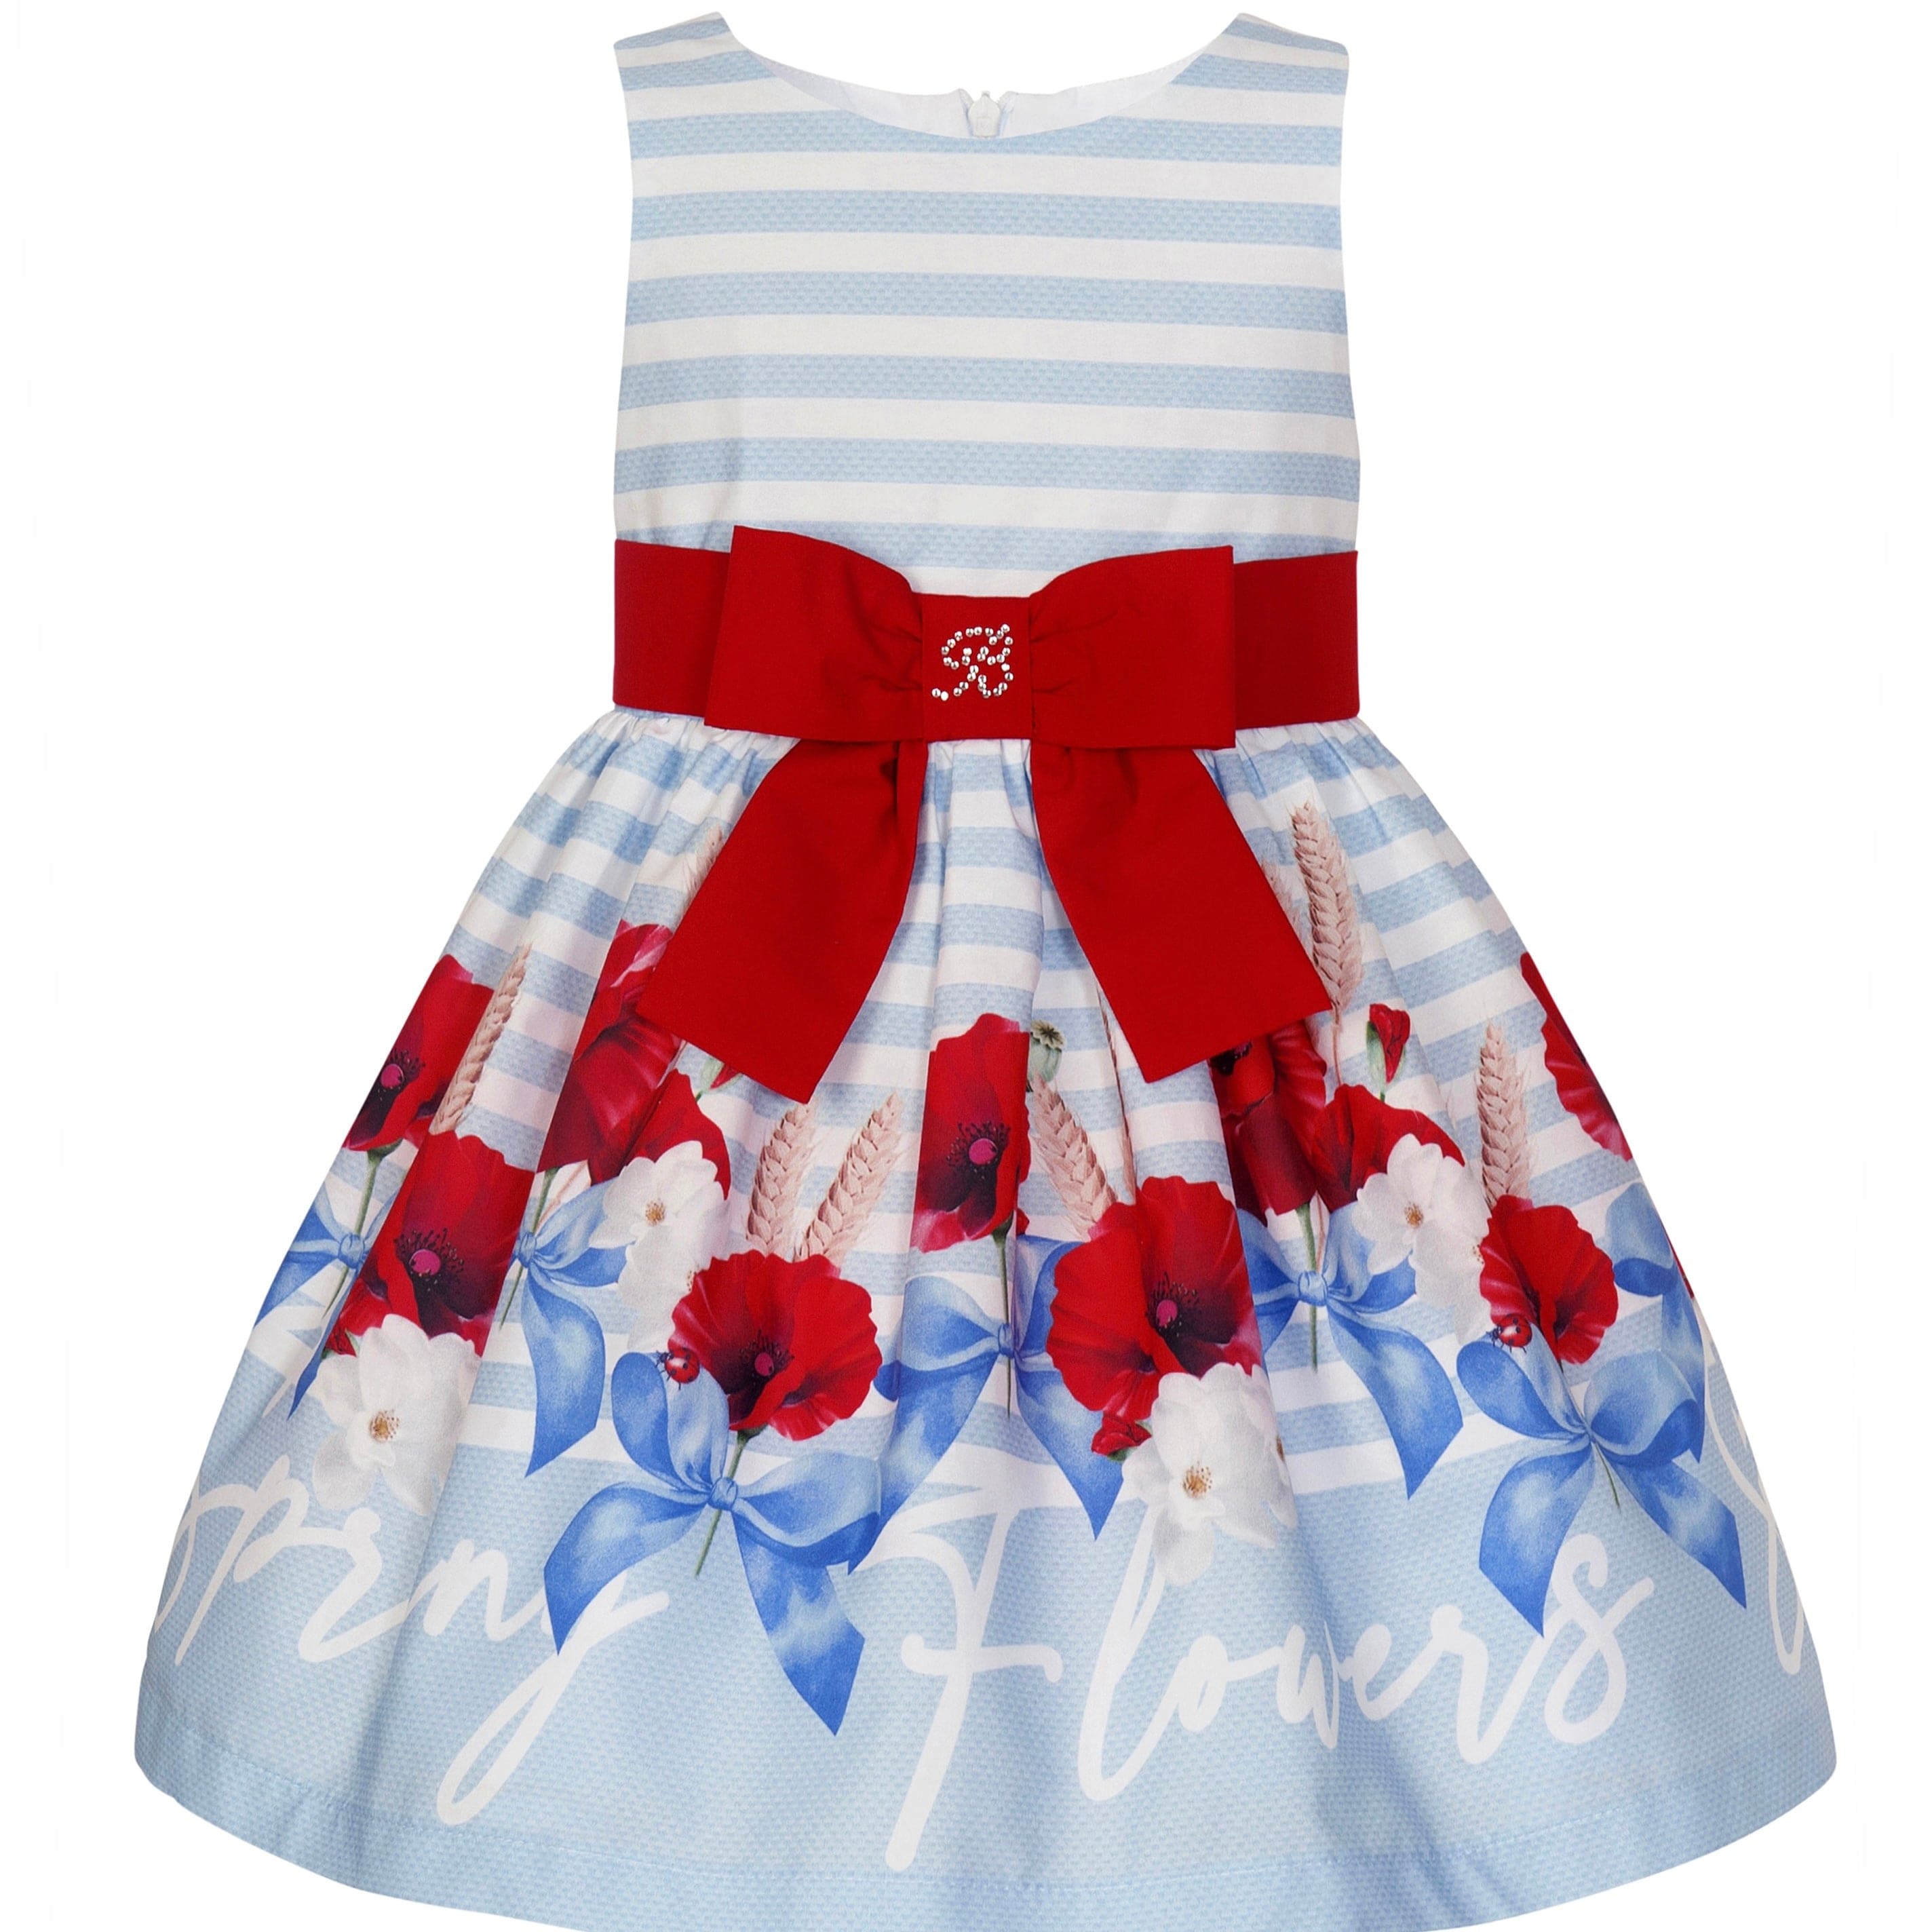 BALLOON CHIC - Poppy Stripe Dress - White